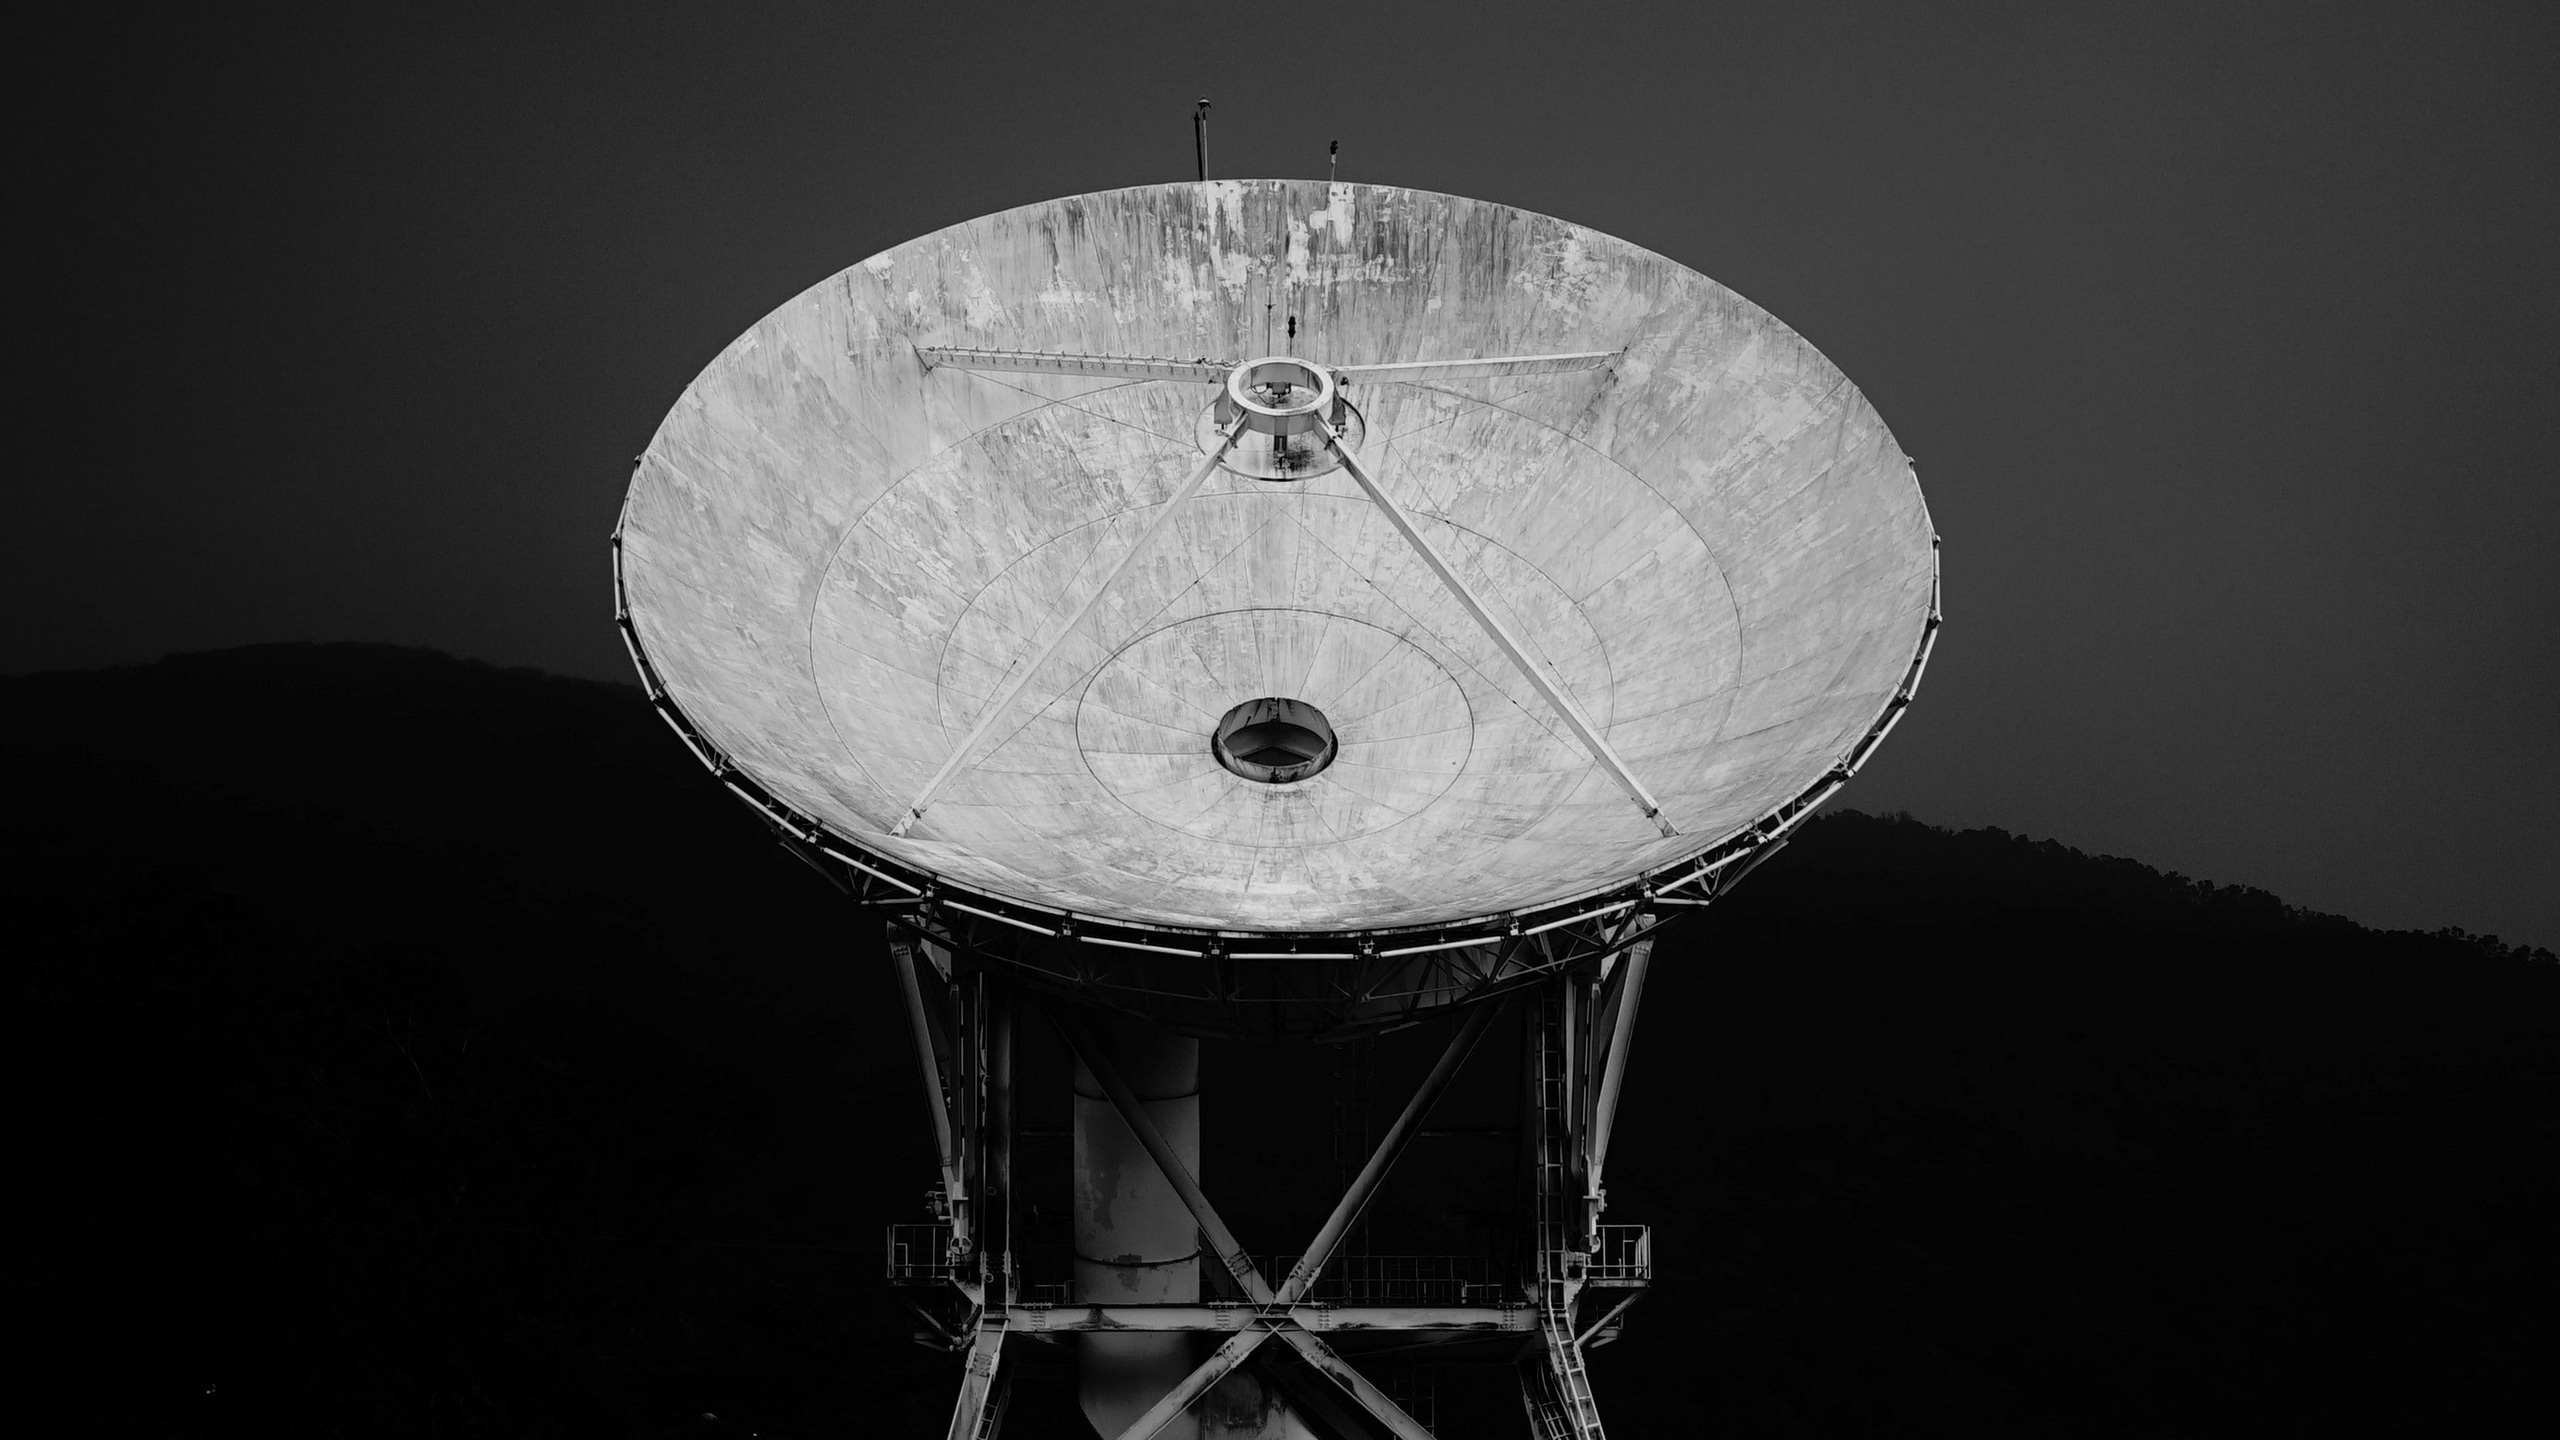 Wallpaper / a black and white shot of a dish radio telescope, satellite antenna skyward 4k wallpaper free download